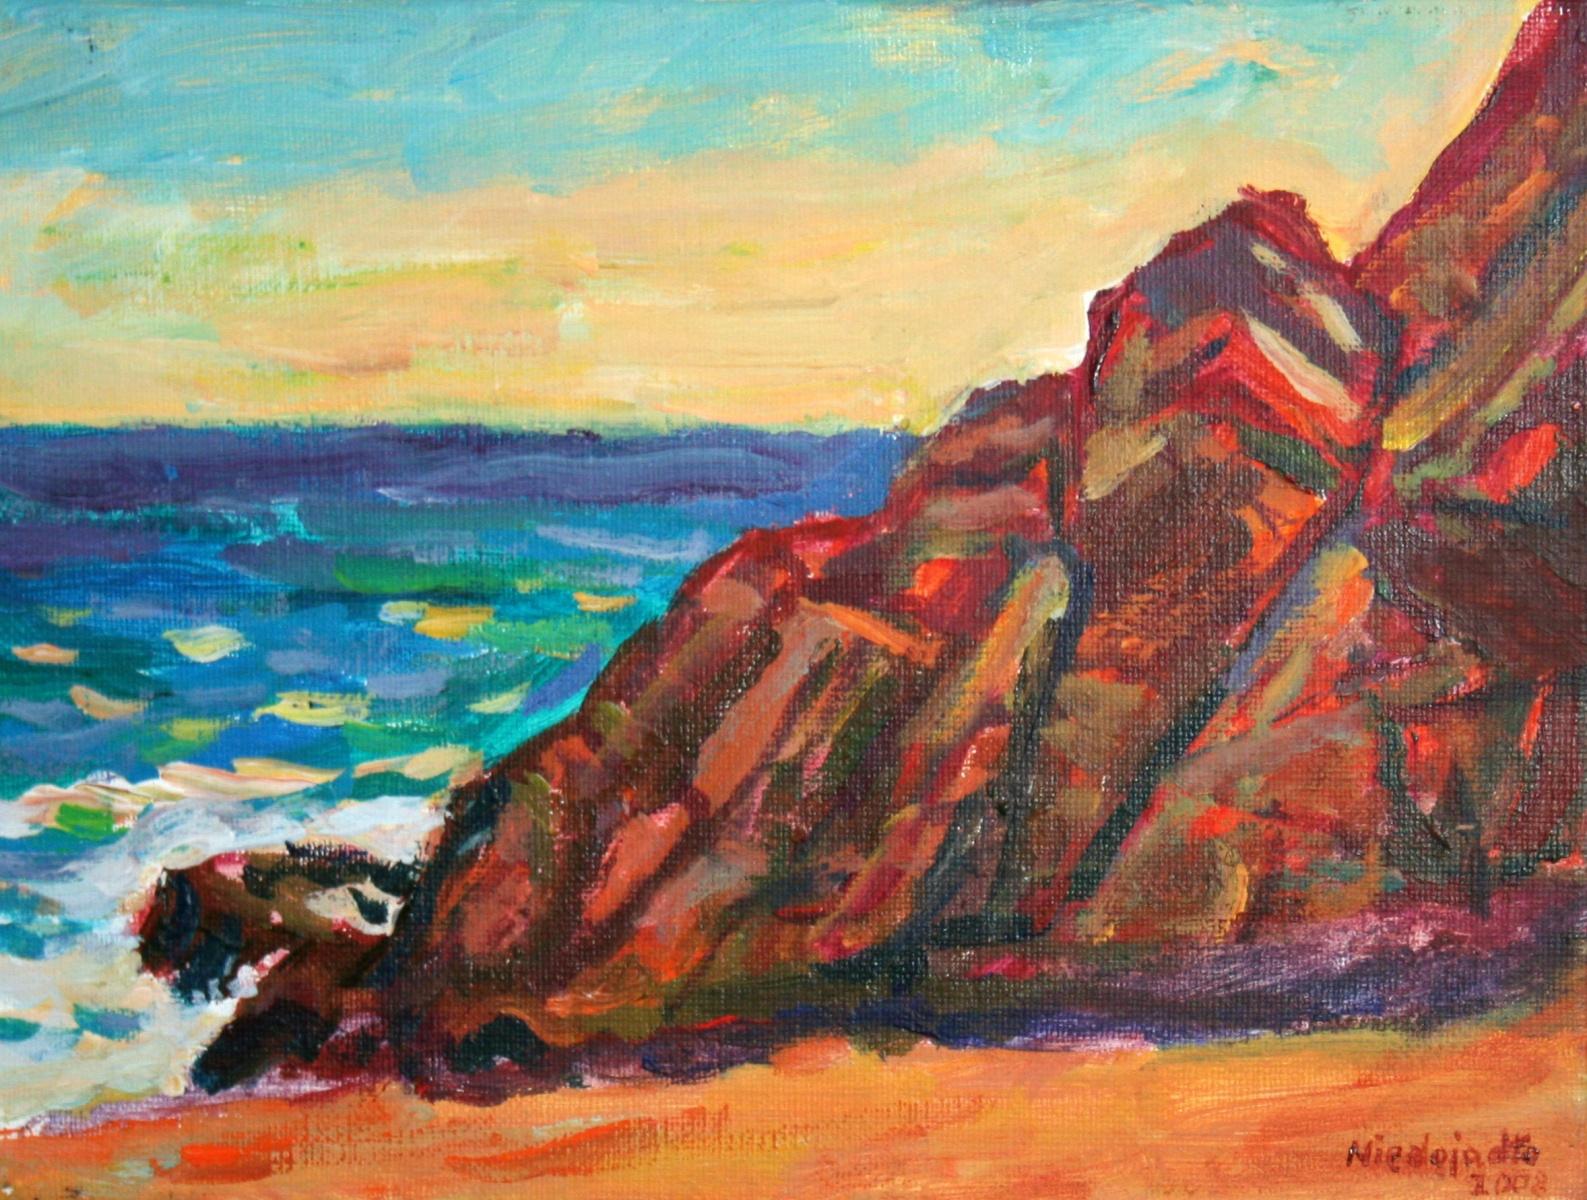 Marek Niedojadło Landscape Painting - Rocks in Spain - 21 century, Oil landscape painting, Colourful